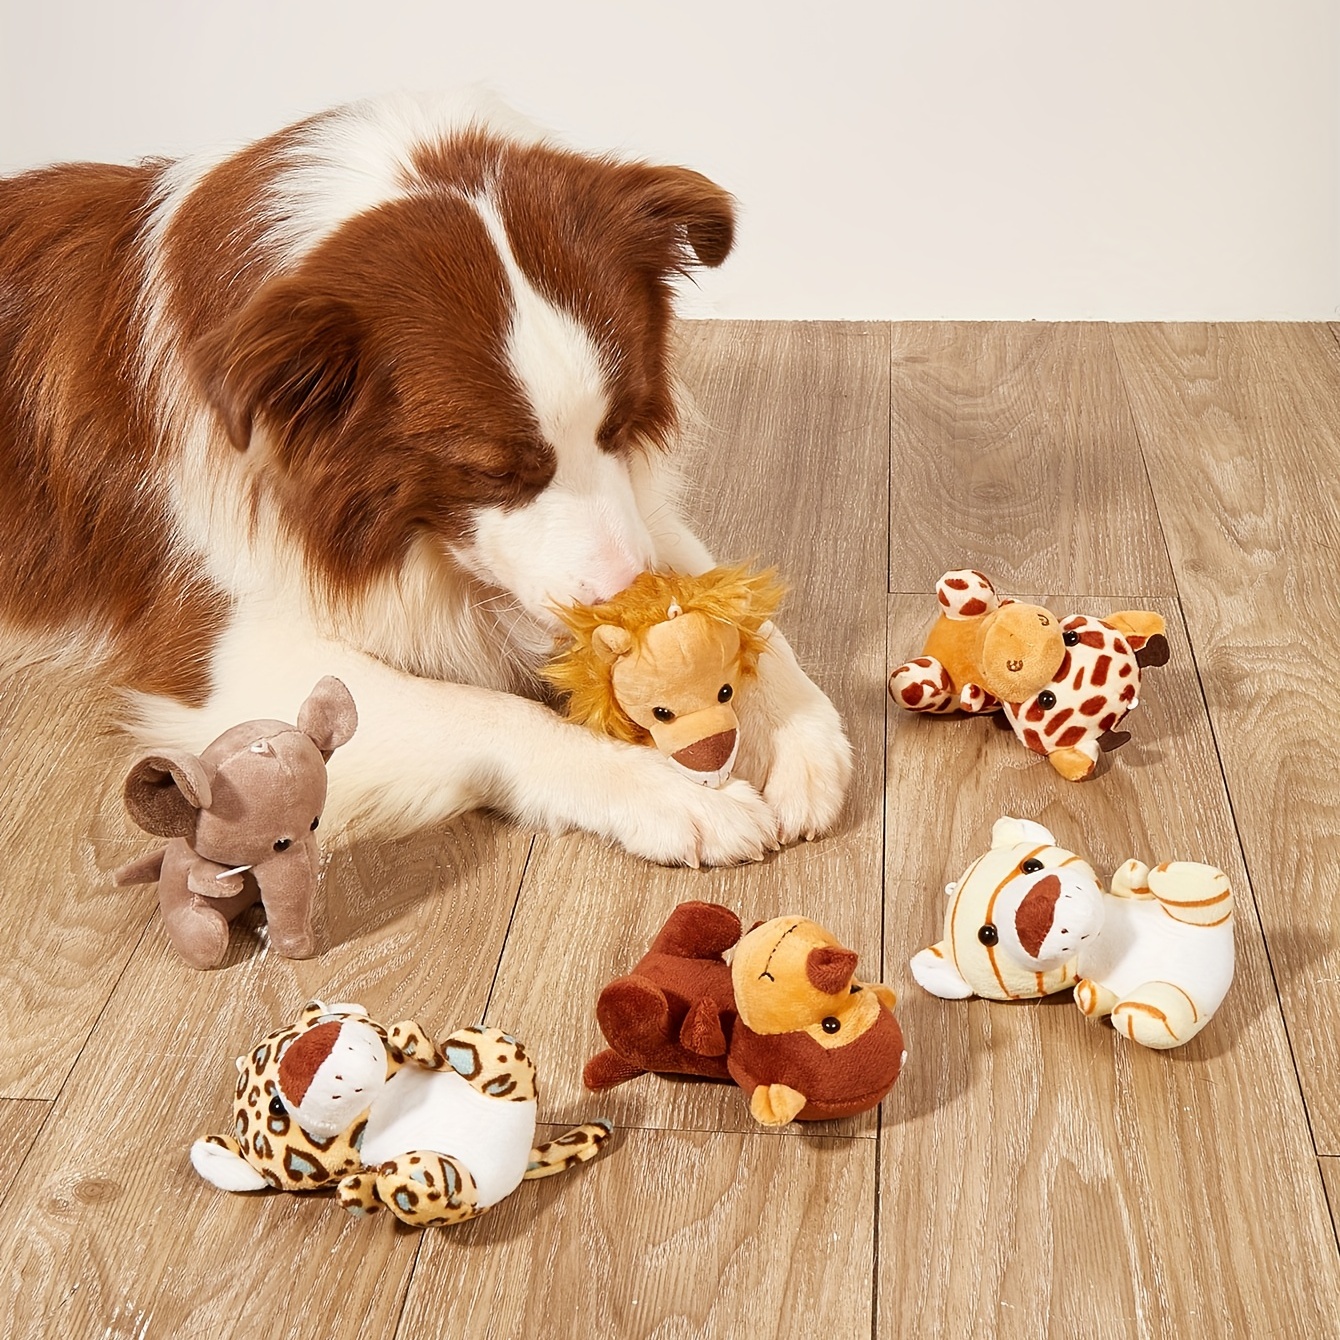 

Small Breed Dog Plush Toys - Cartoon Jungle Animals Set Including Lion, Leopard, Elephant, Monkey, Giraffe, Tiger - Soft Plush Material, 1 Piece Random Color